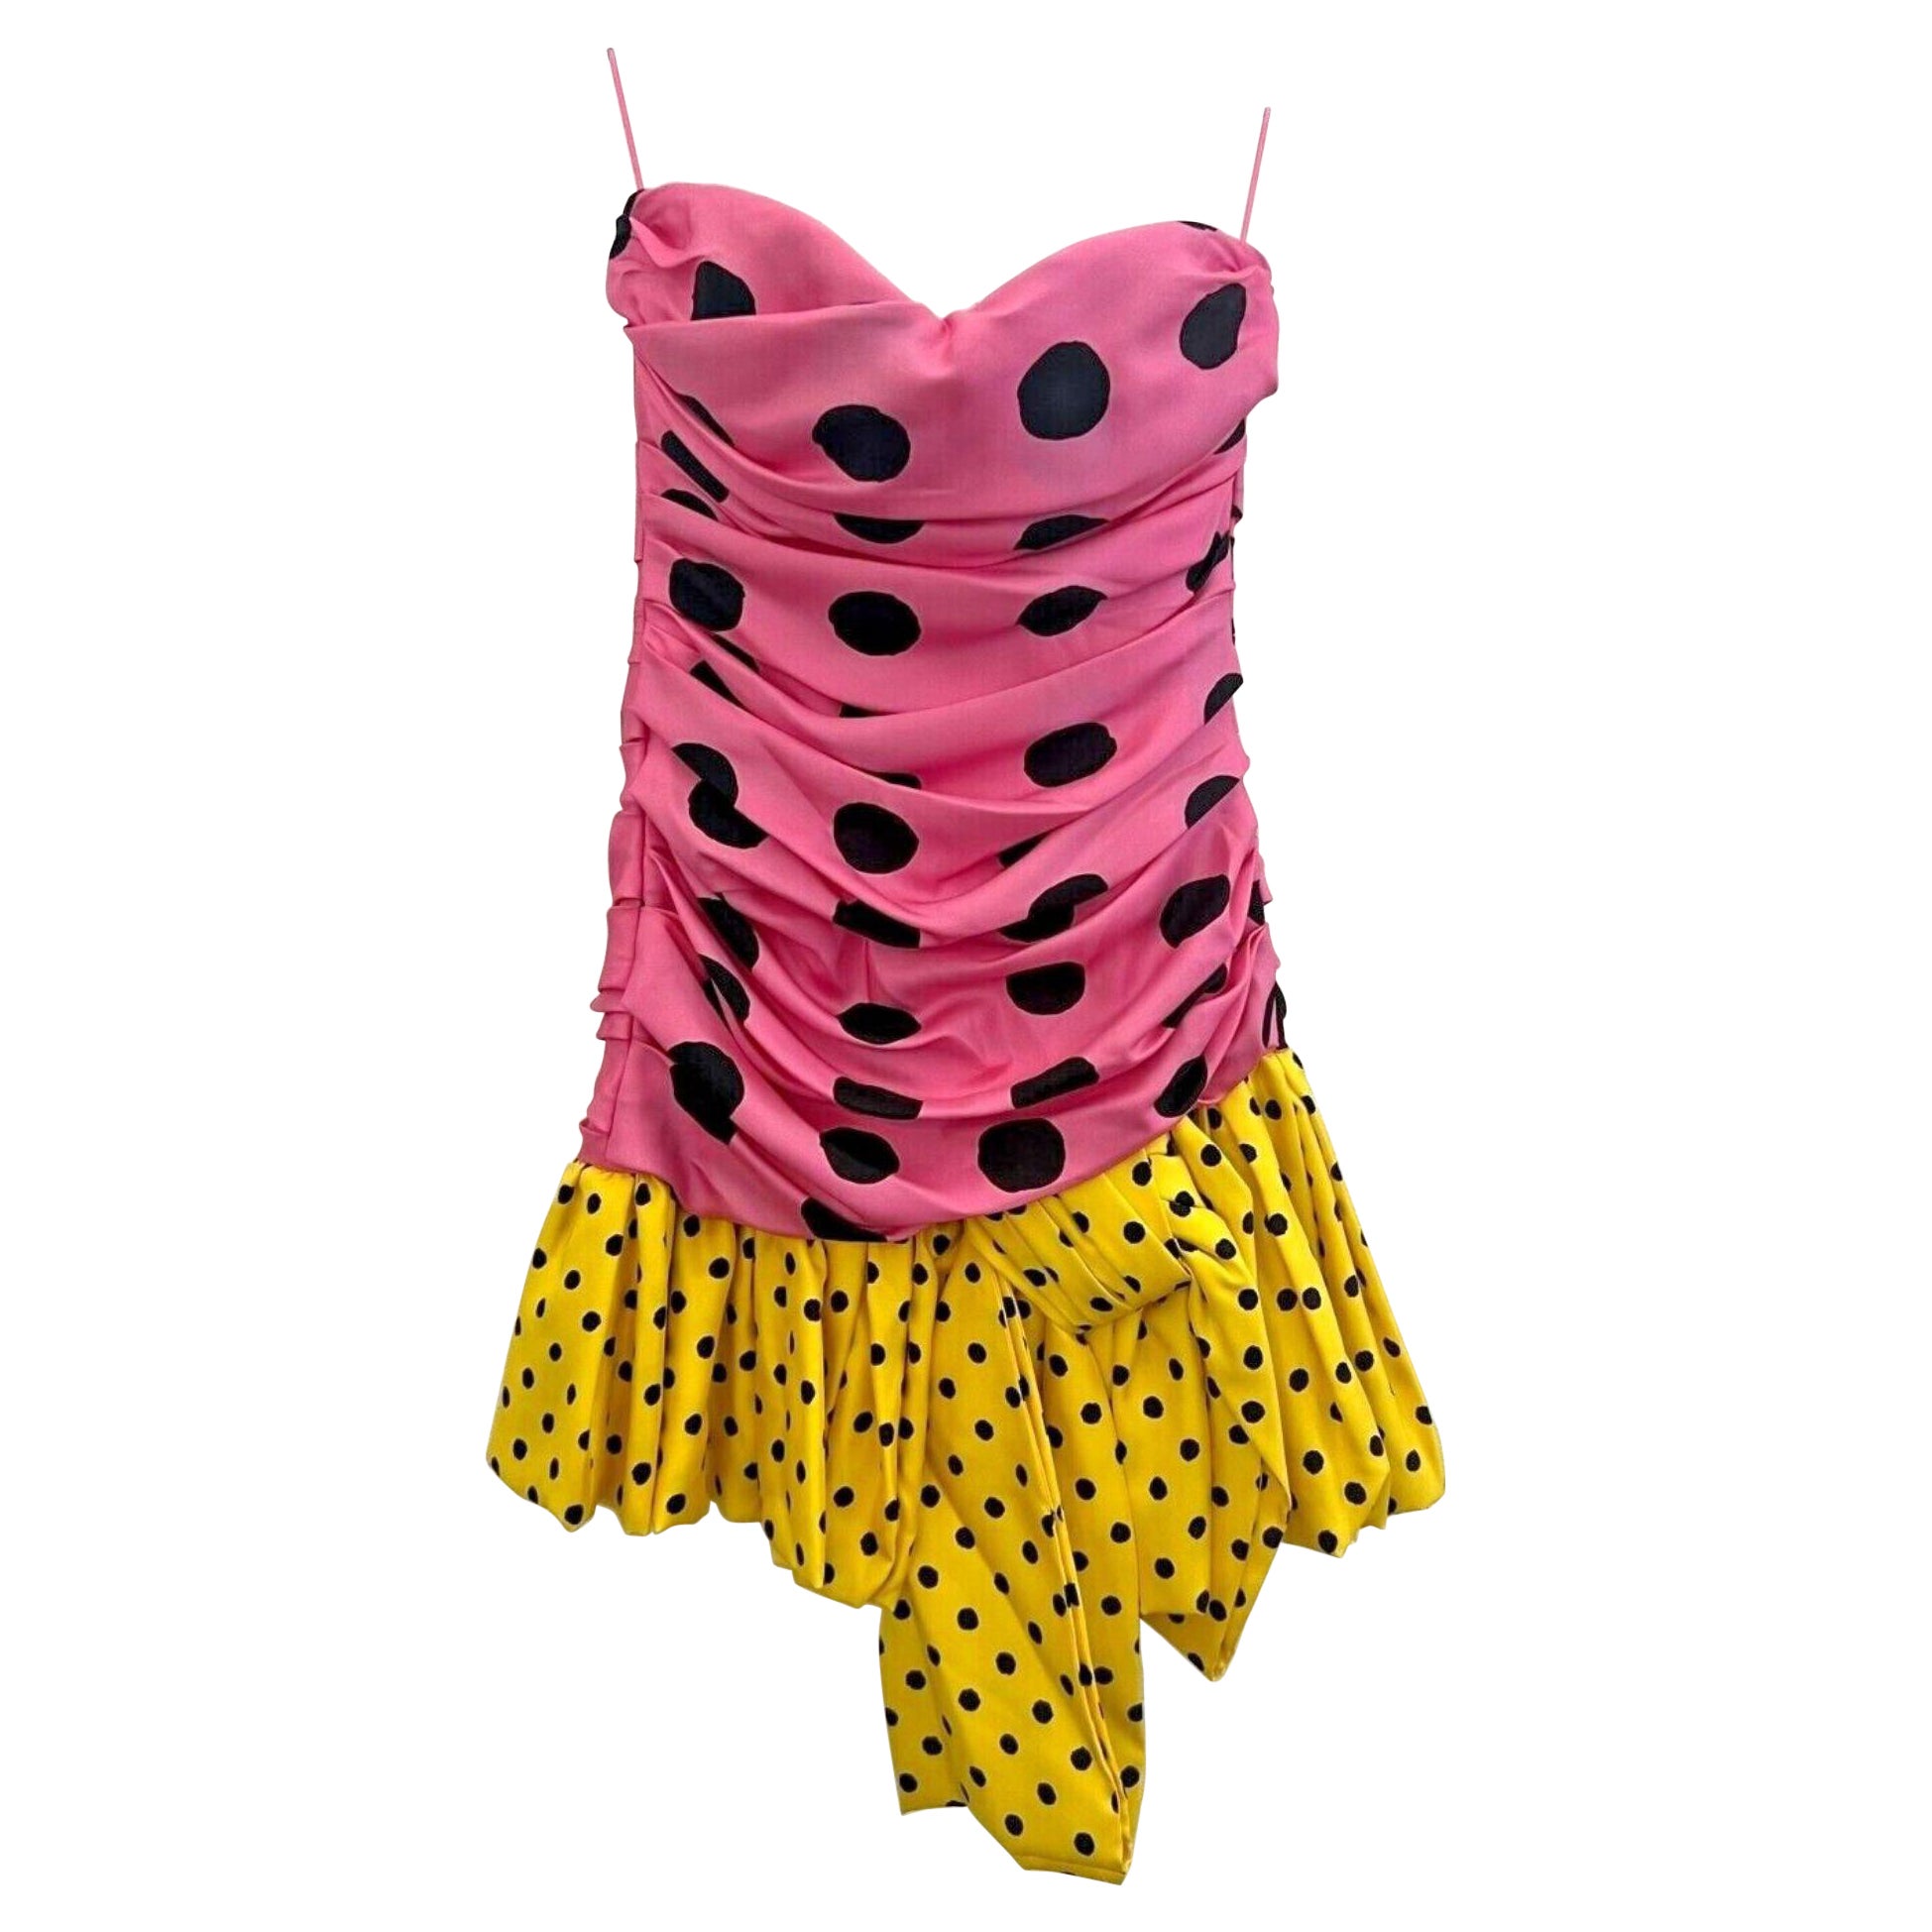 SS21 Moschino Couture Pink Yellow Strapless Polka Dot Mini Dress by Jeremy Scott